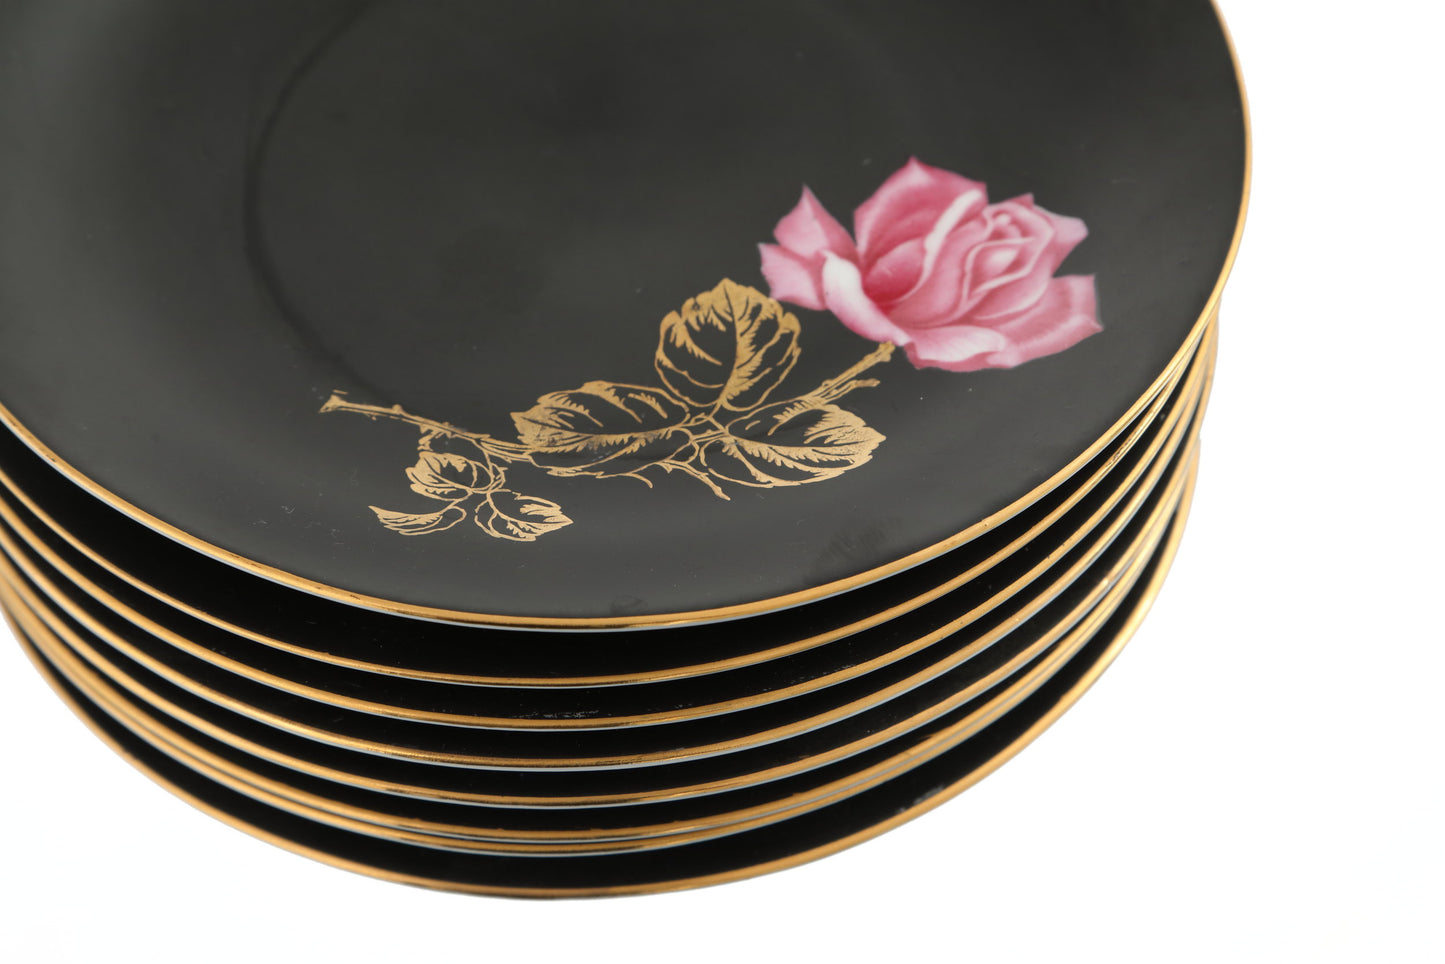 Bavaria porcelain plates with decal decoration